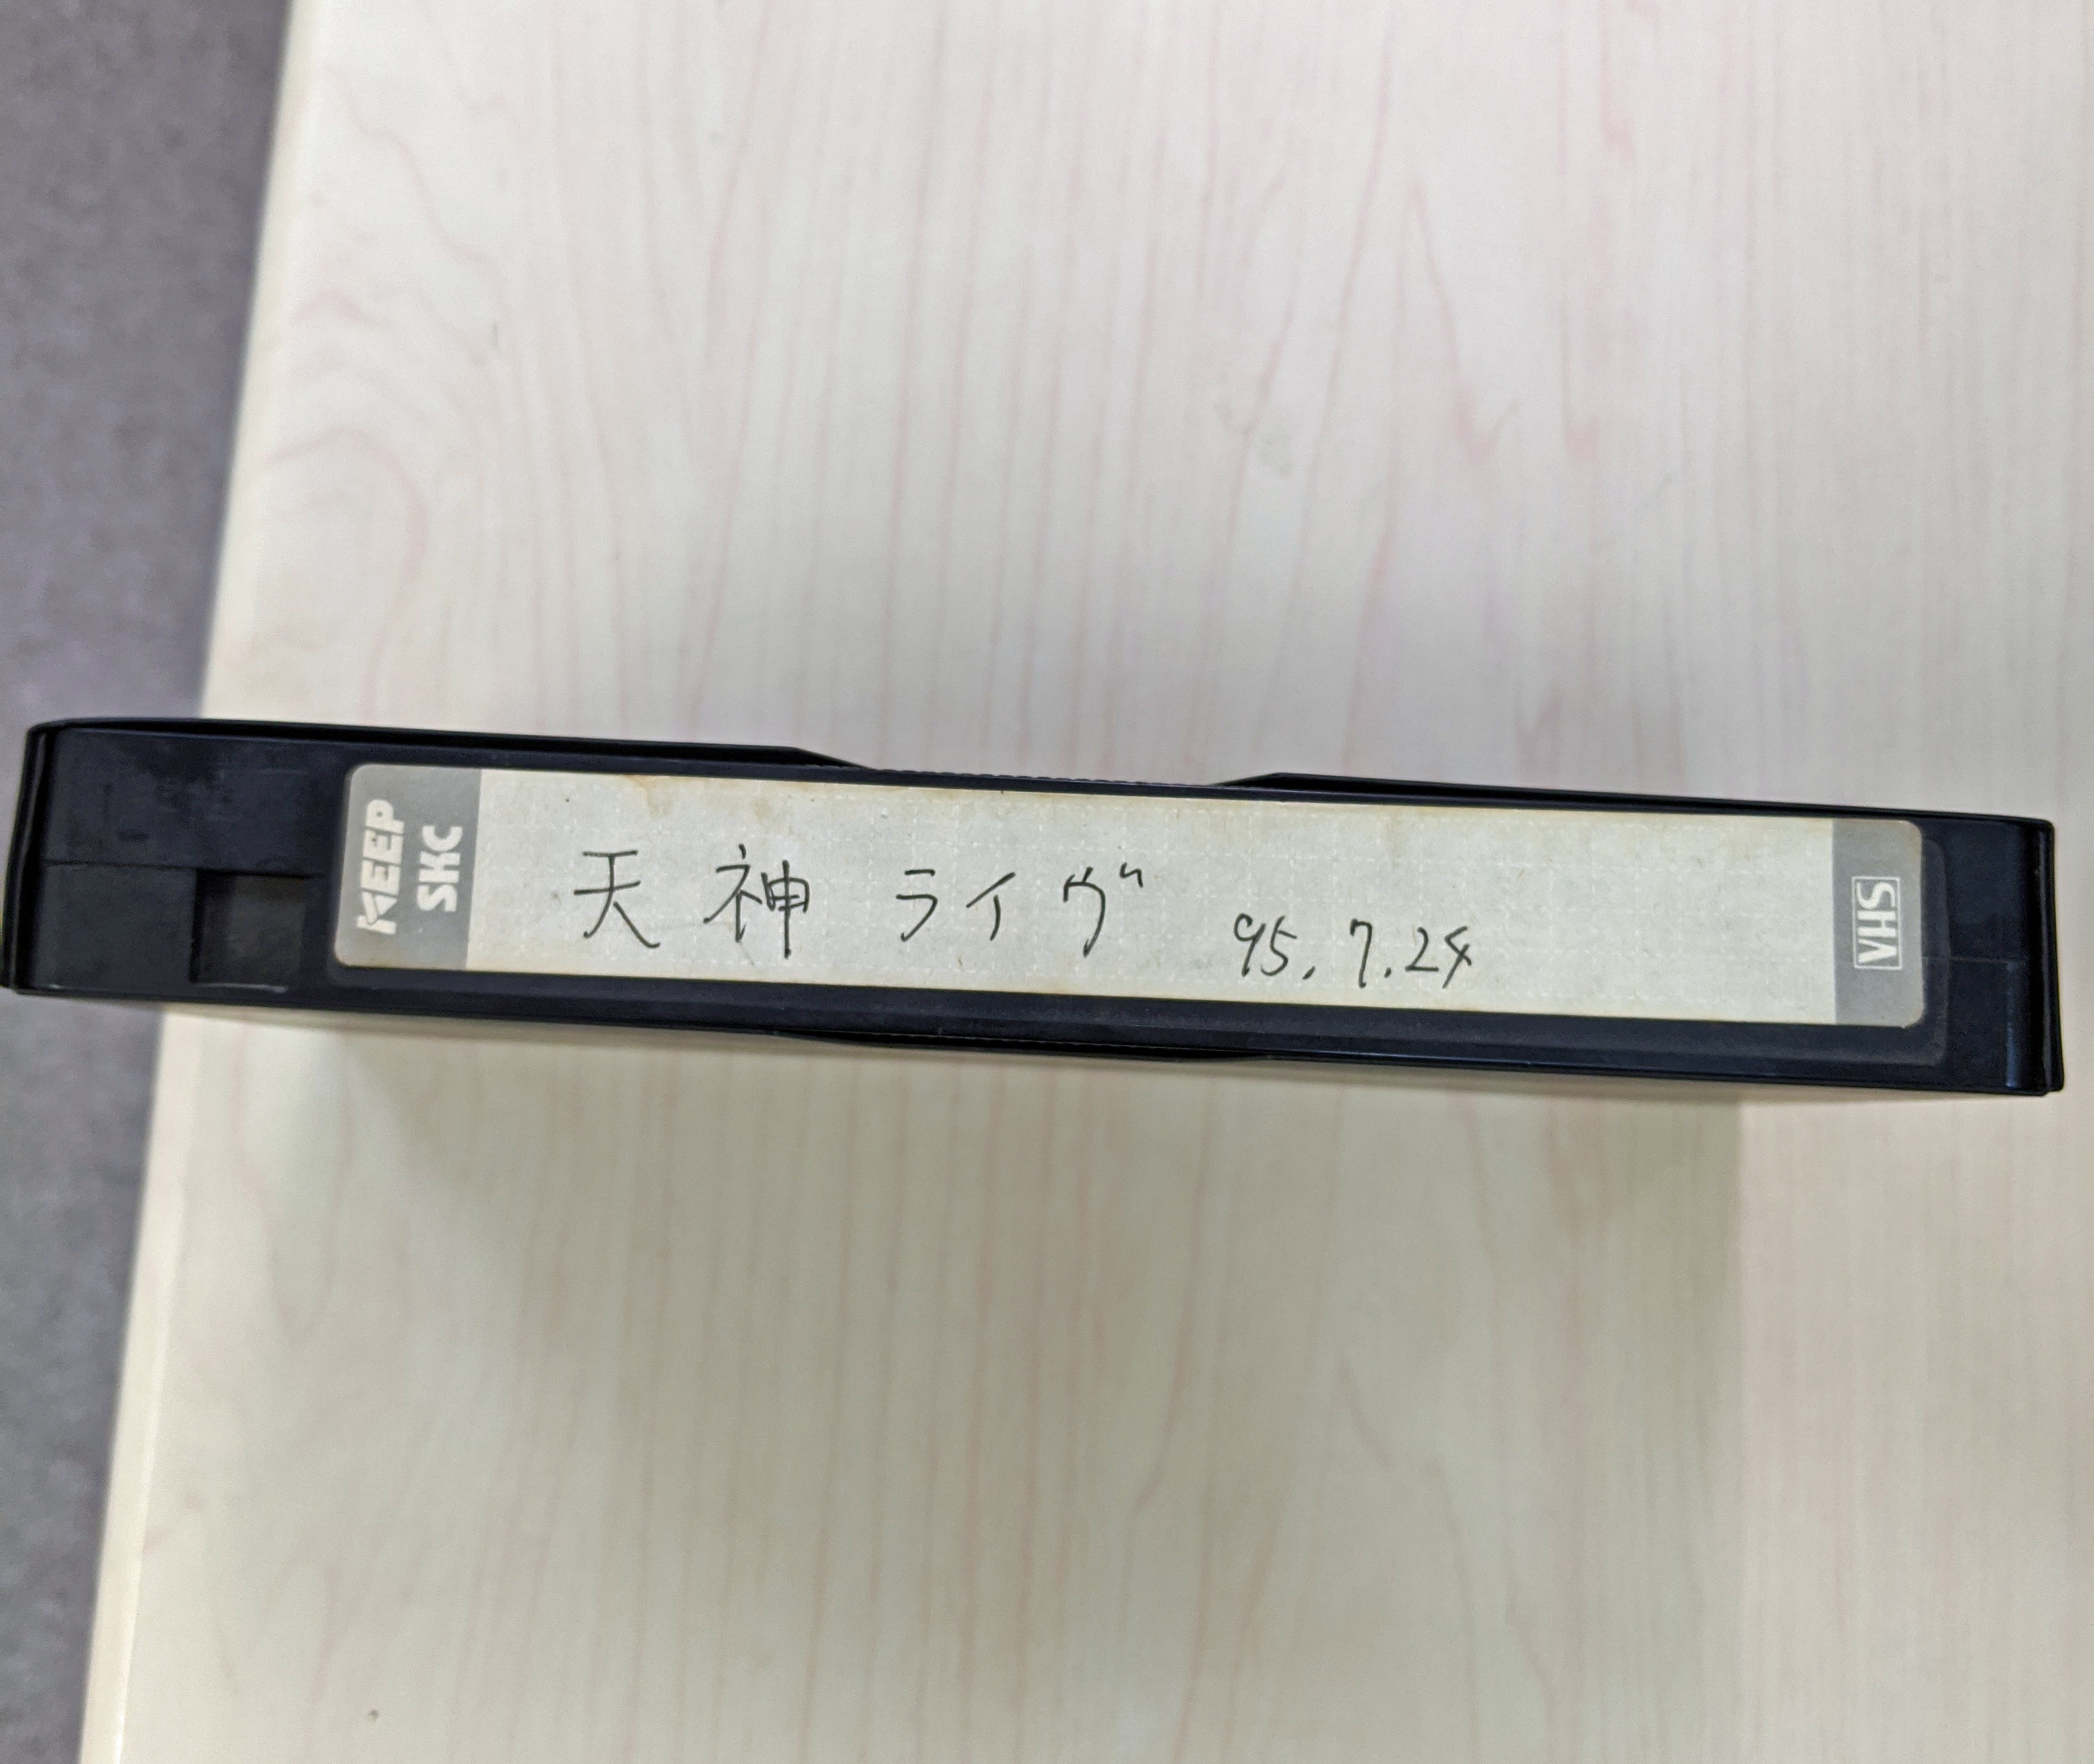 Tsutaya Shibuyaがビデオテープのレンタル開始 その数なんと約6000本 デッキもレンタルしているぞ ロケットニュース24